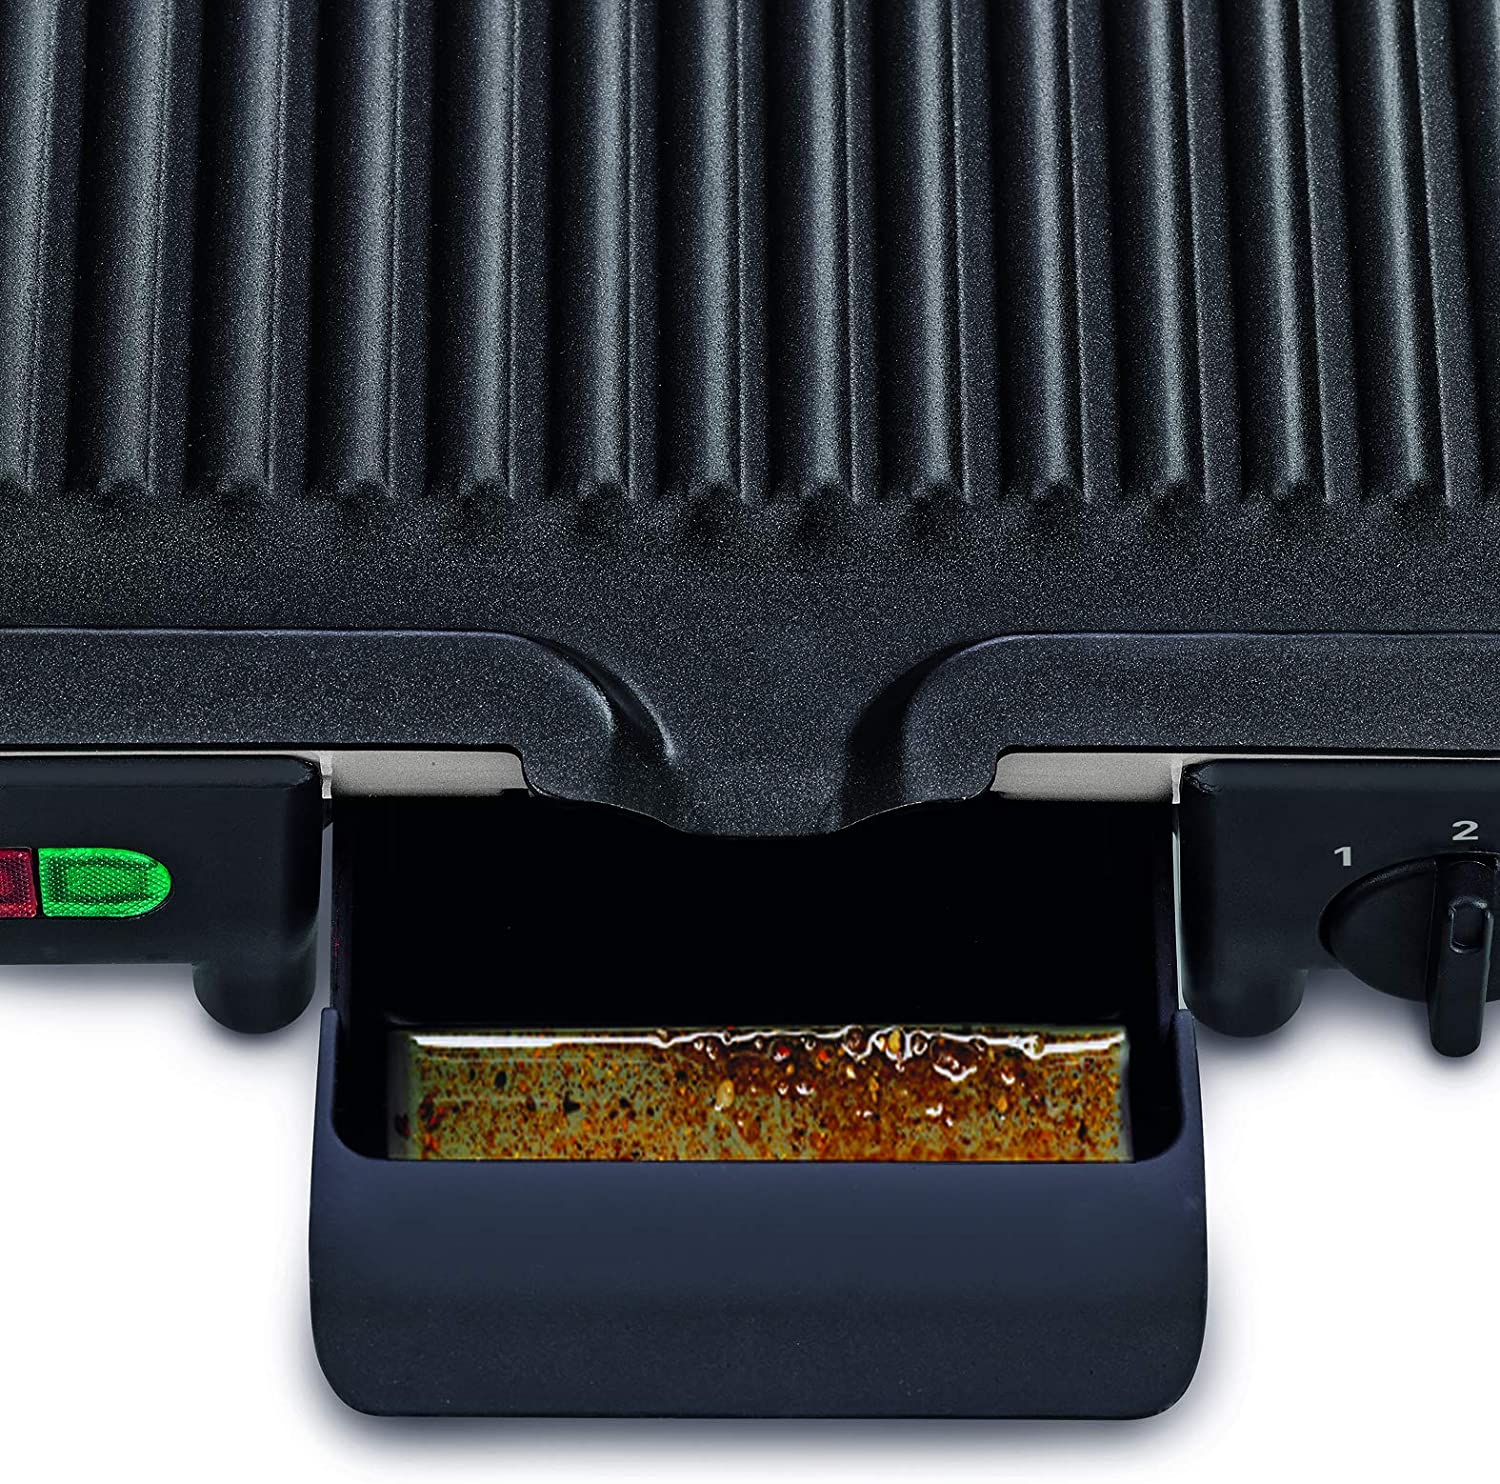 کباب پز مدل Tefal Grill Ultra compact Barbecue - ارسال ۱۰ الی ۱۵ روز کاری